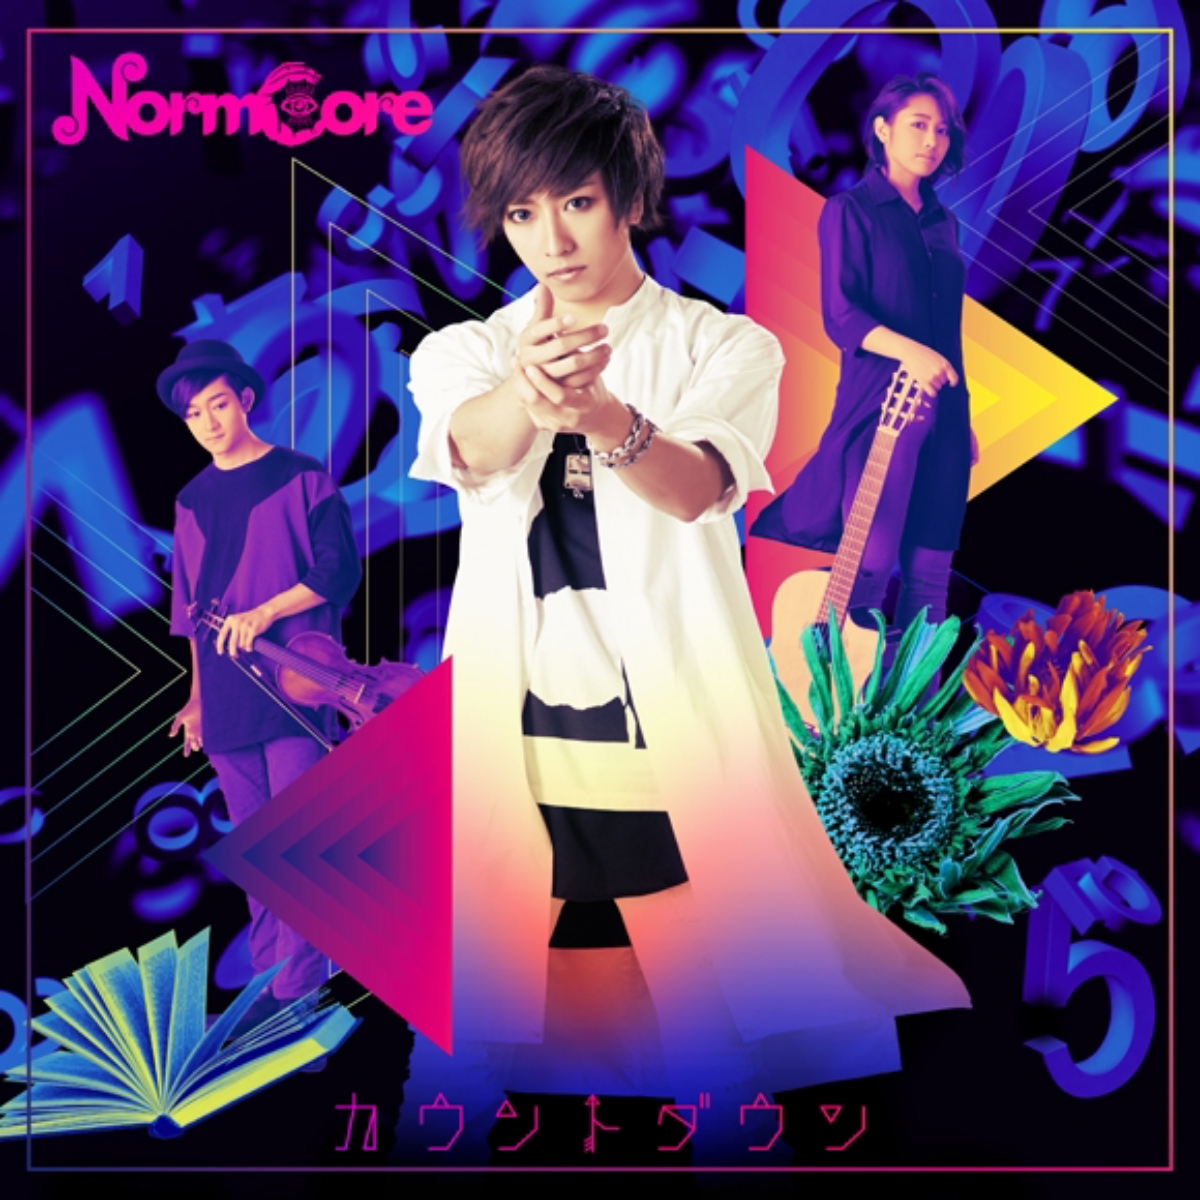 NormCore - Countdown